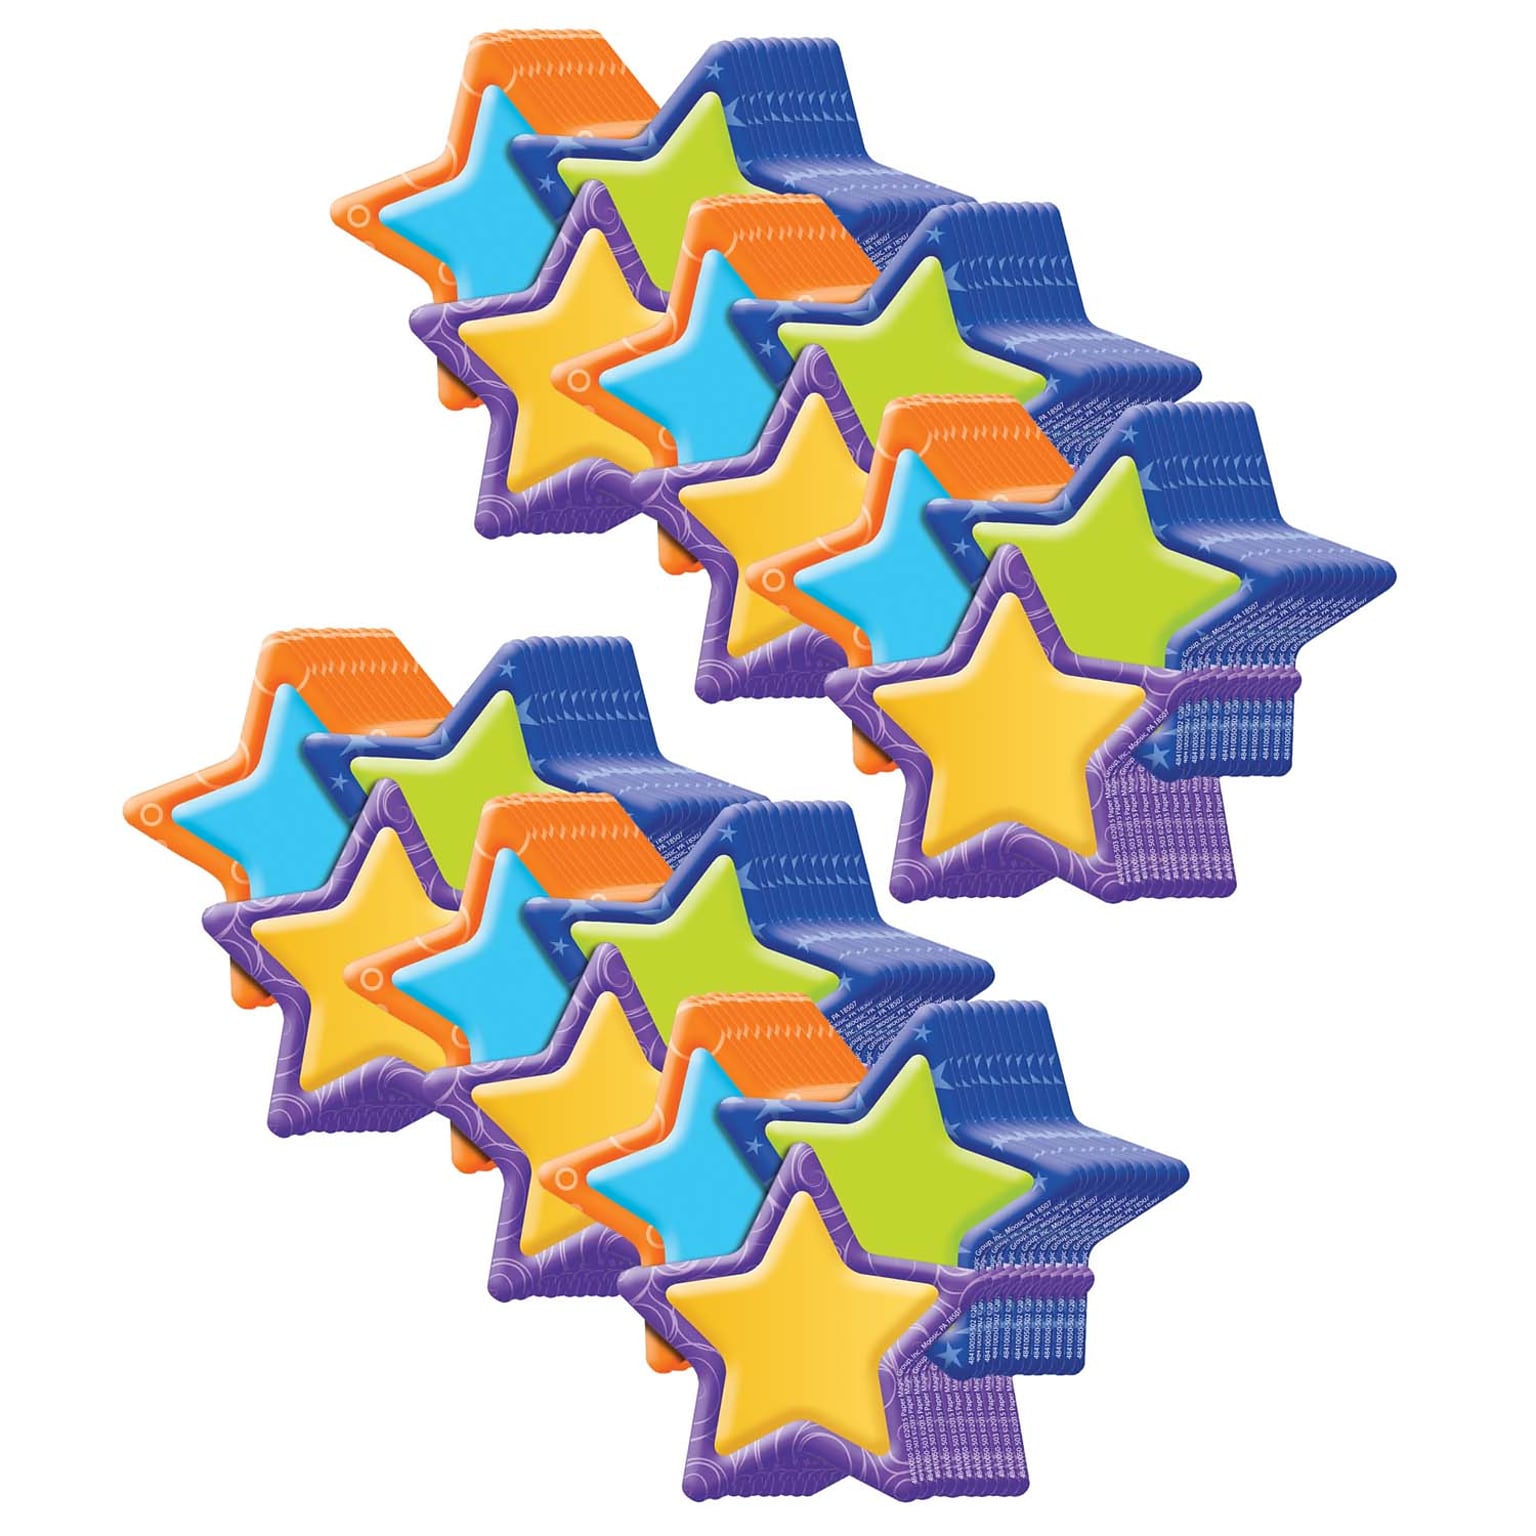 Eureka Color My World Stars Assorted Paper Cut Outs, 36 Per Pack, 6 Packs (EU-841005-6)